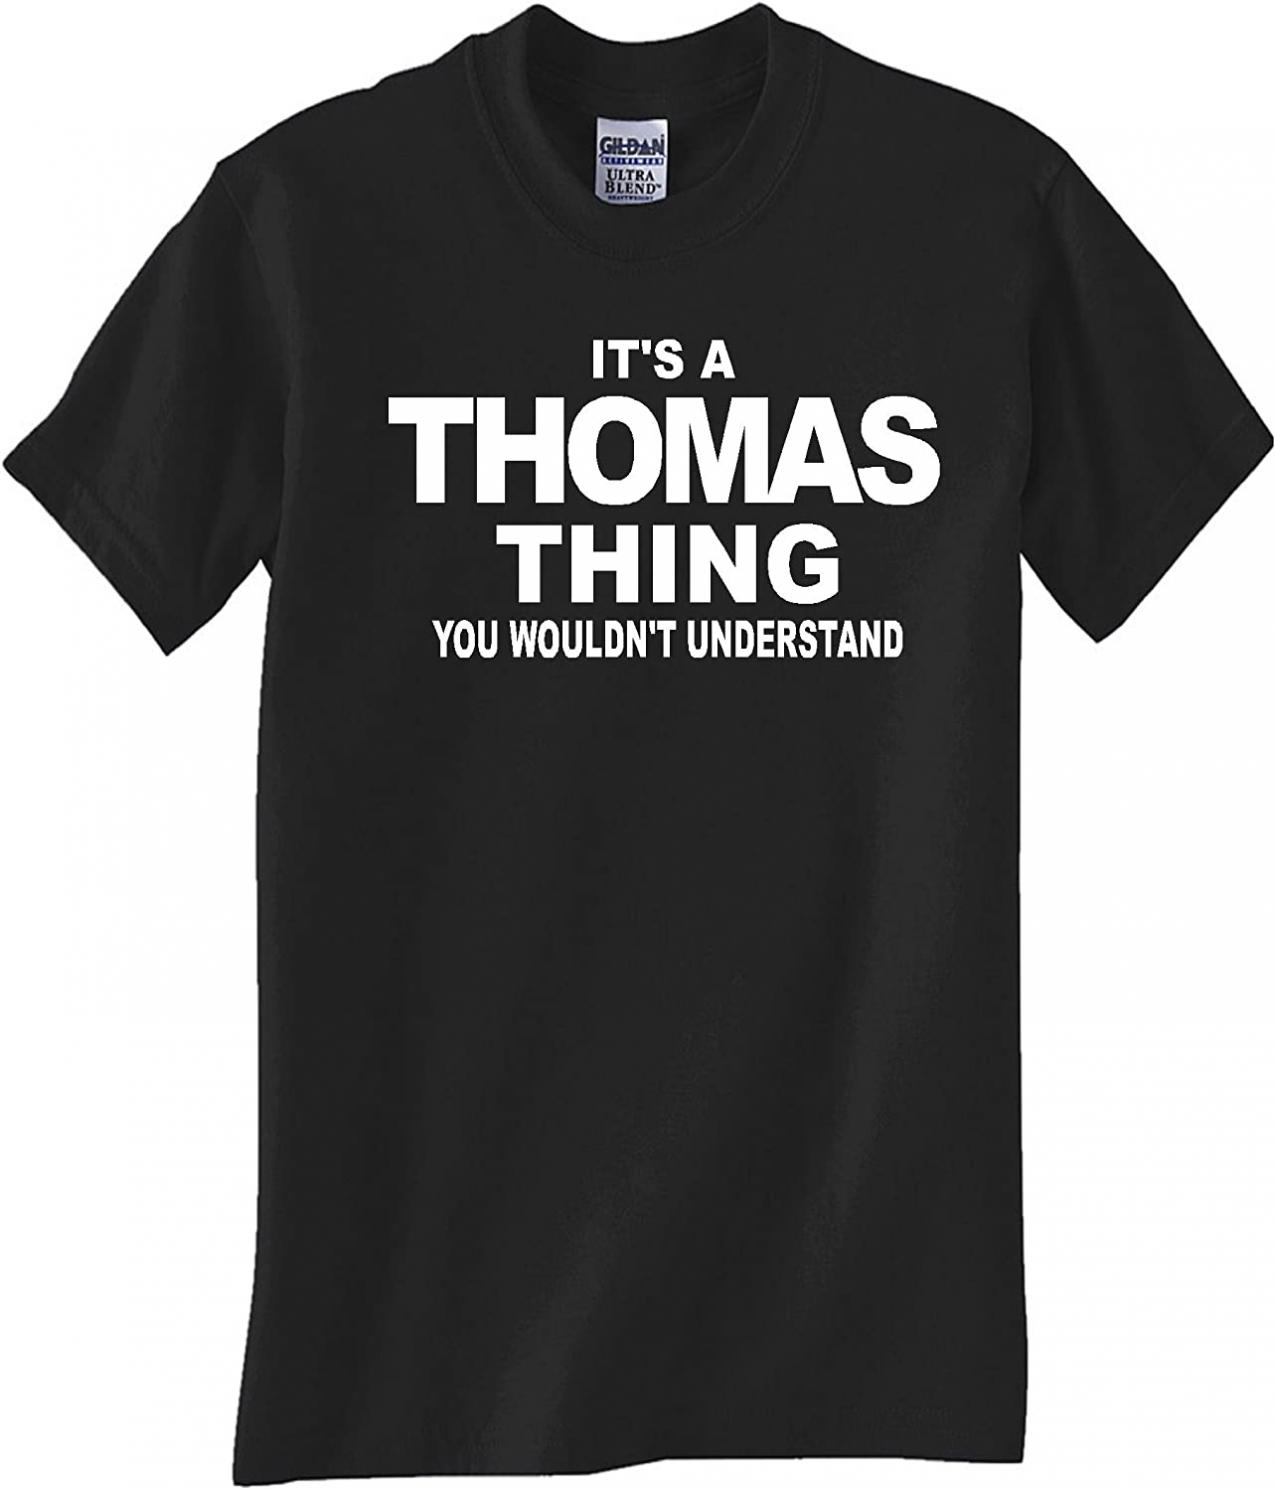 Gildan Thomas Thing Black T Shirt